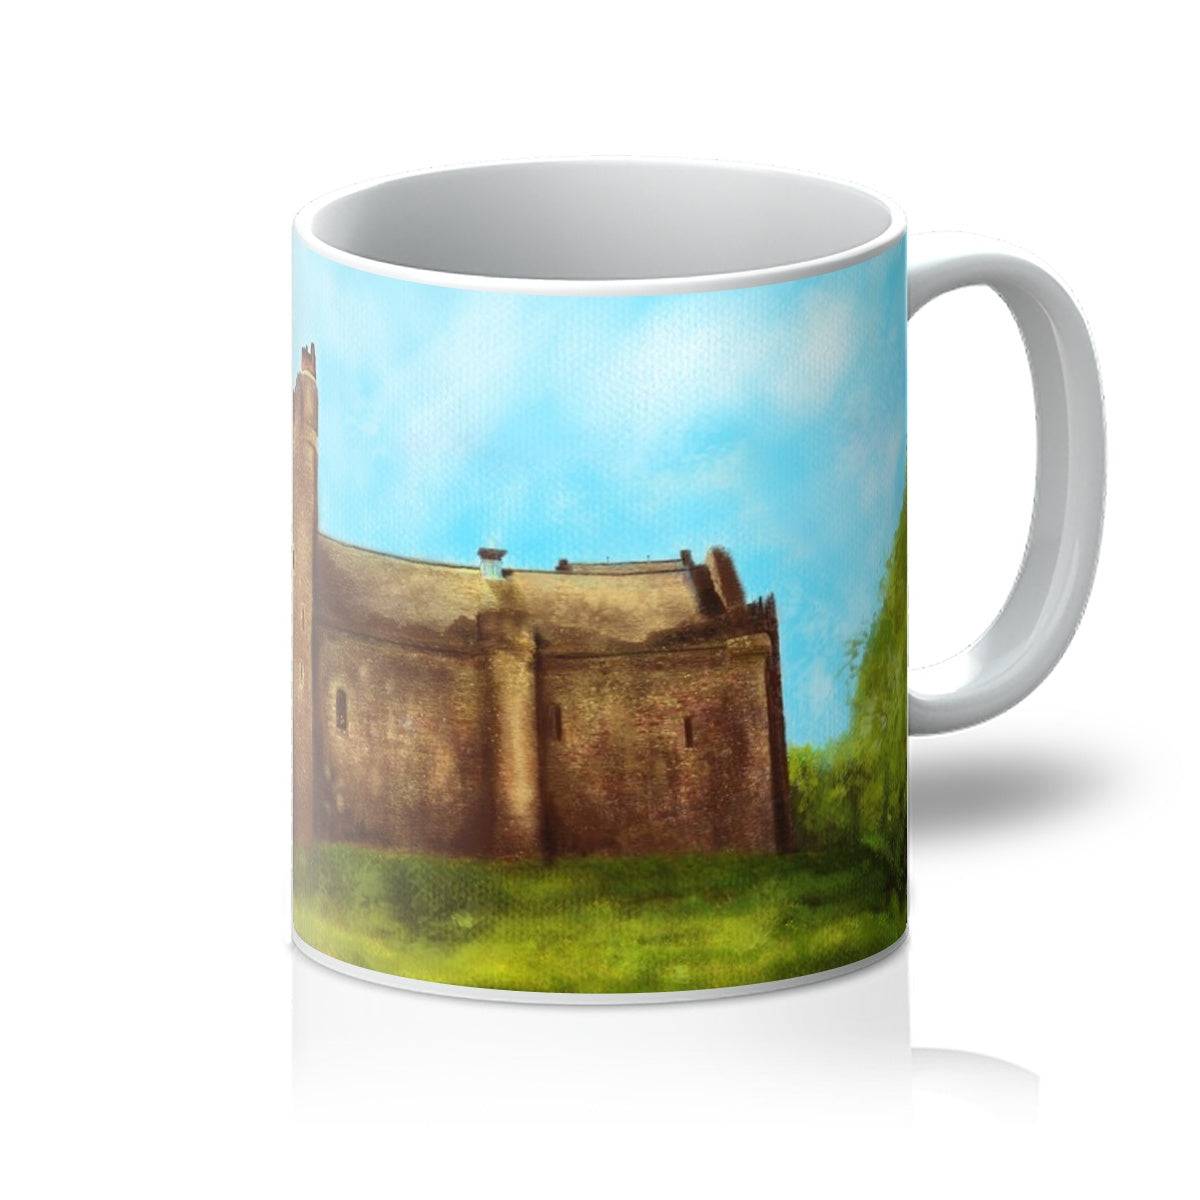 Doune Castle Art Gifts Mug-Mugs-Scottish Castles Art Gallery-11oz-White-Paintings, Prints, Homeware, Art Gifts From Scotland By Scottish Artist Kevin Hunter